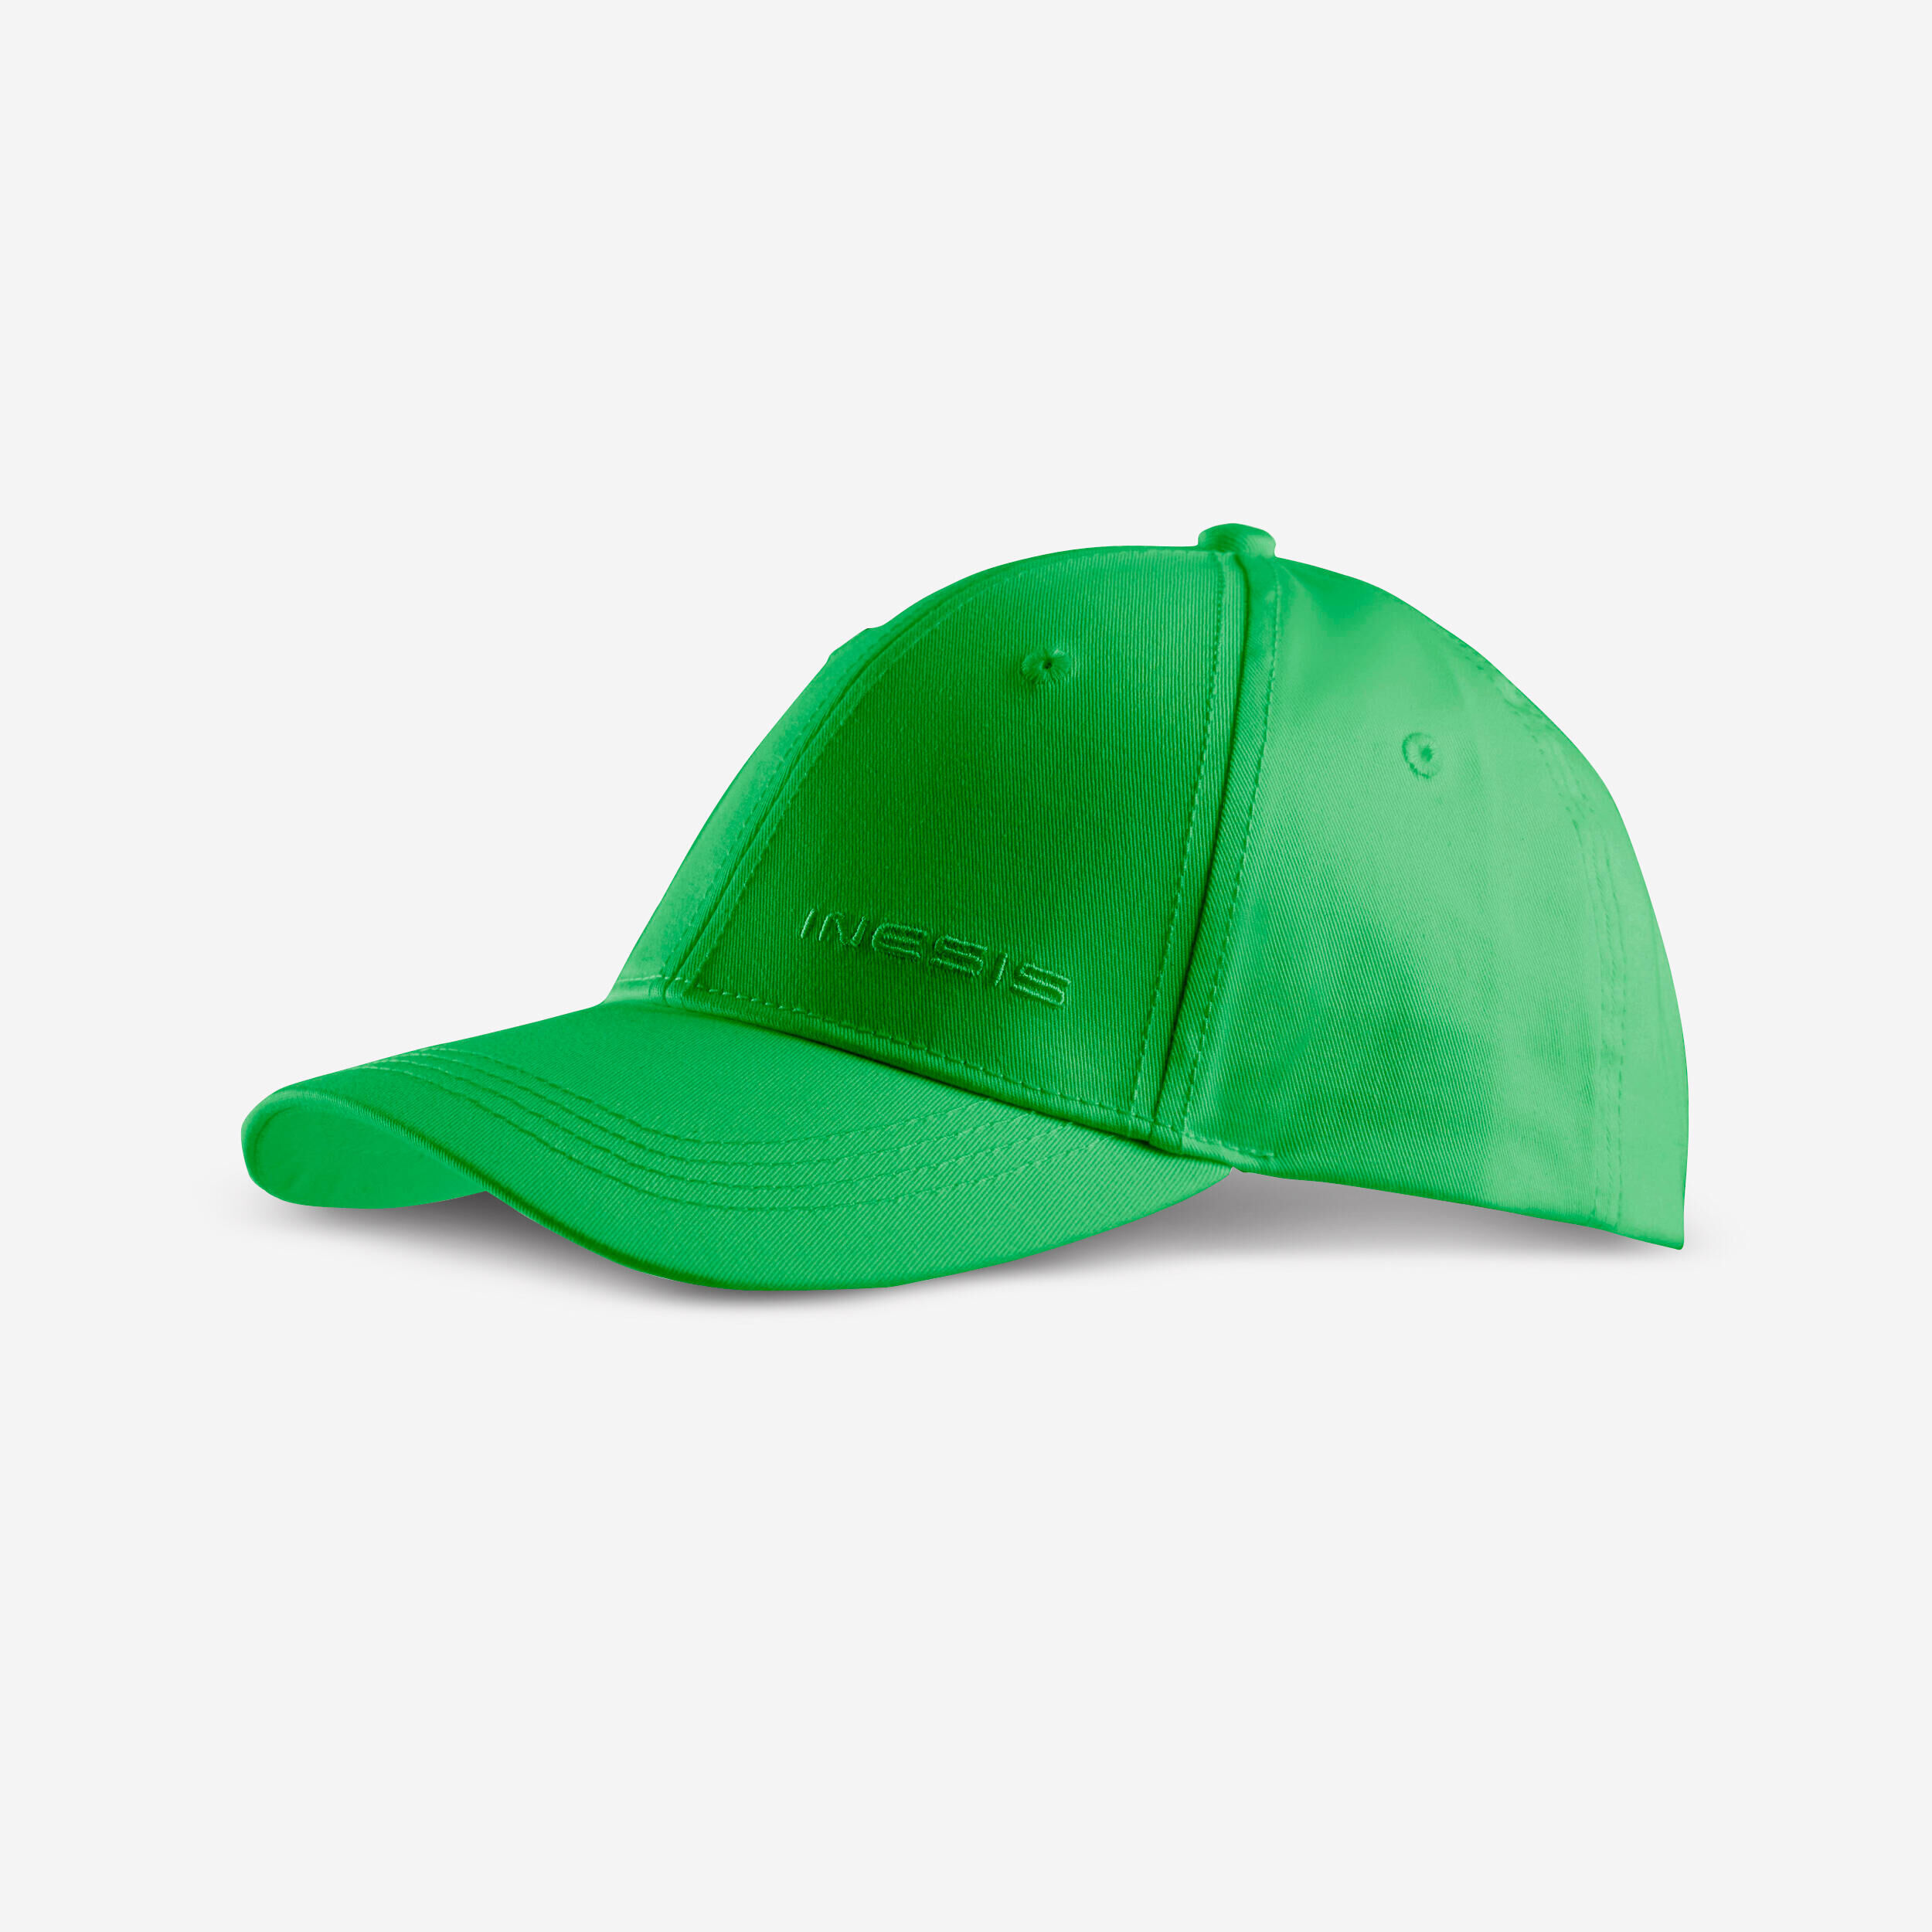 INESIS Adult's golf cap - MW 500 dark green